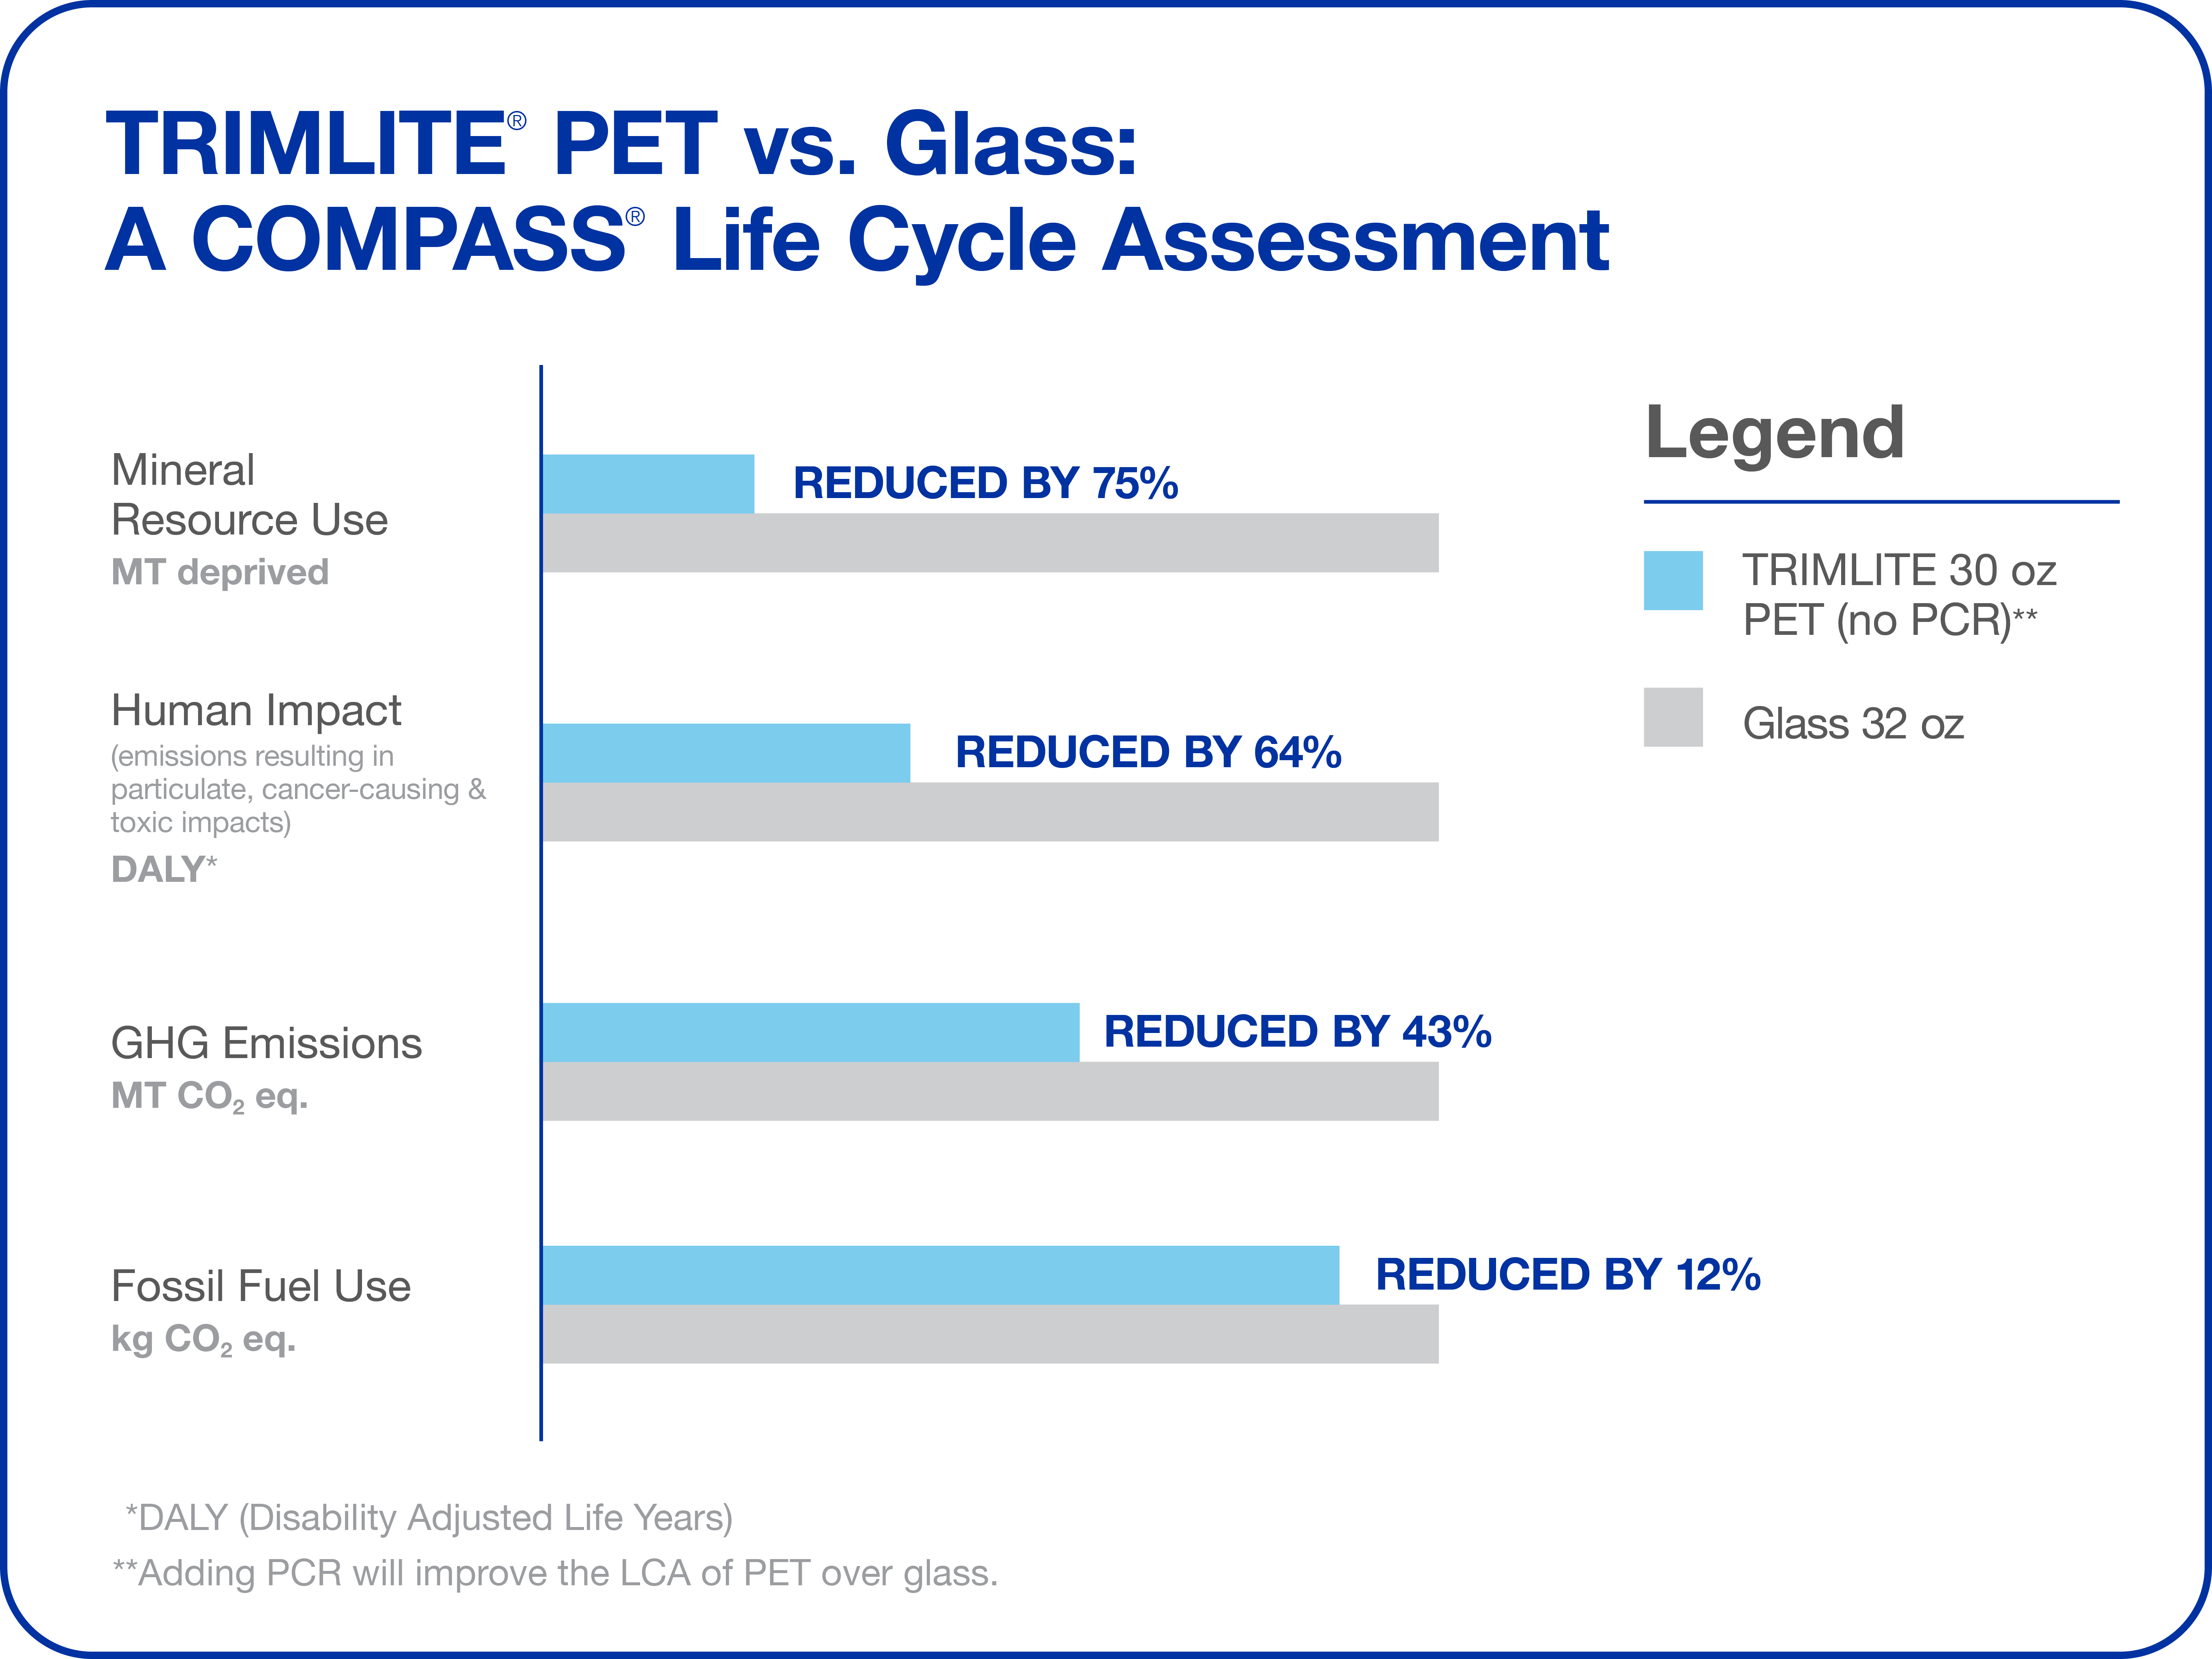 TRIMLITE® PET (30oz) vs. Glass (32oz)* data